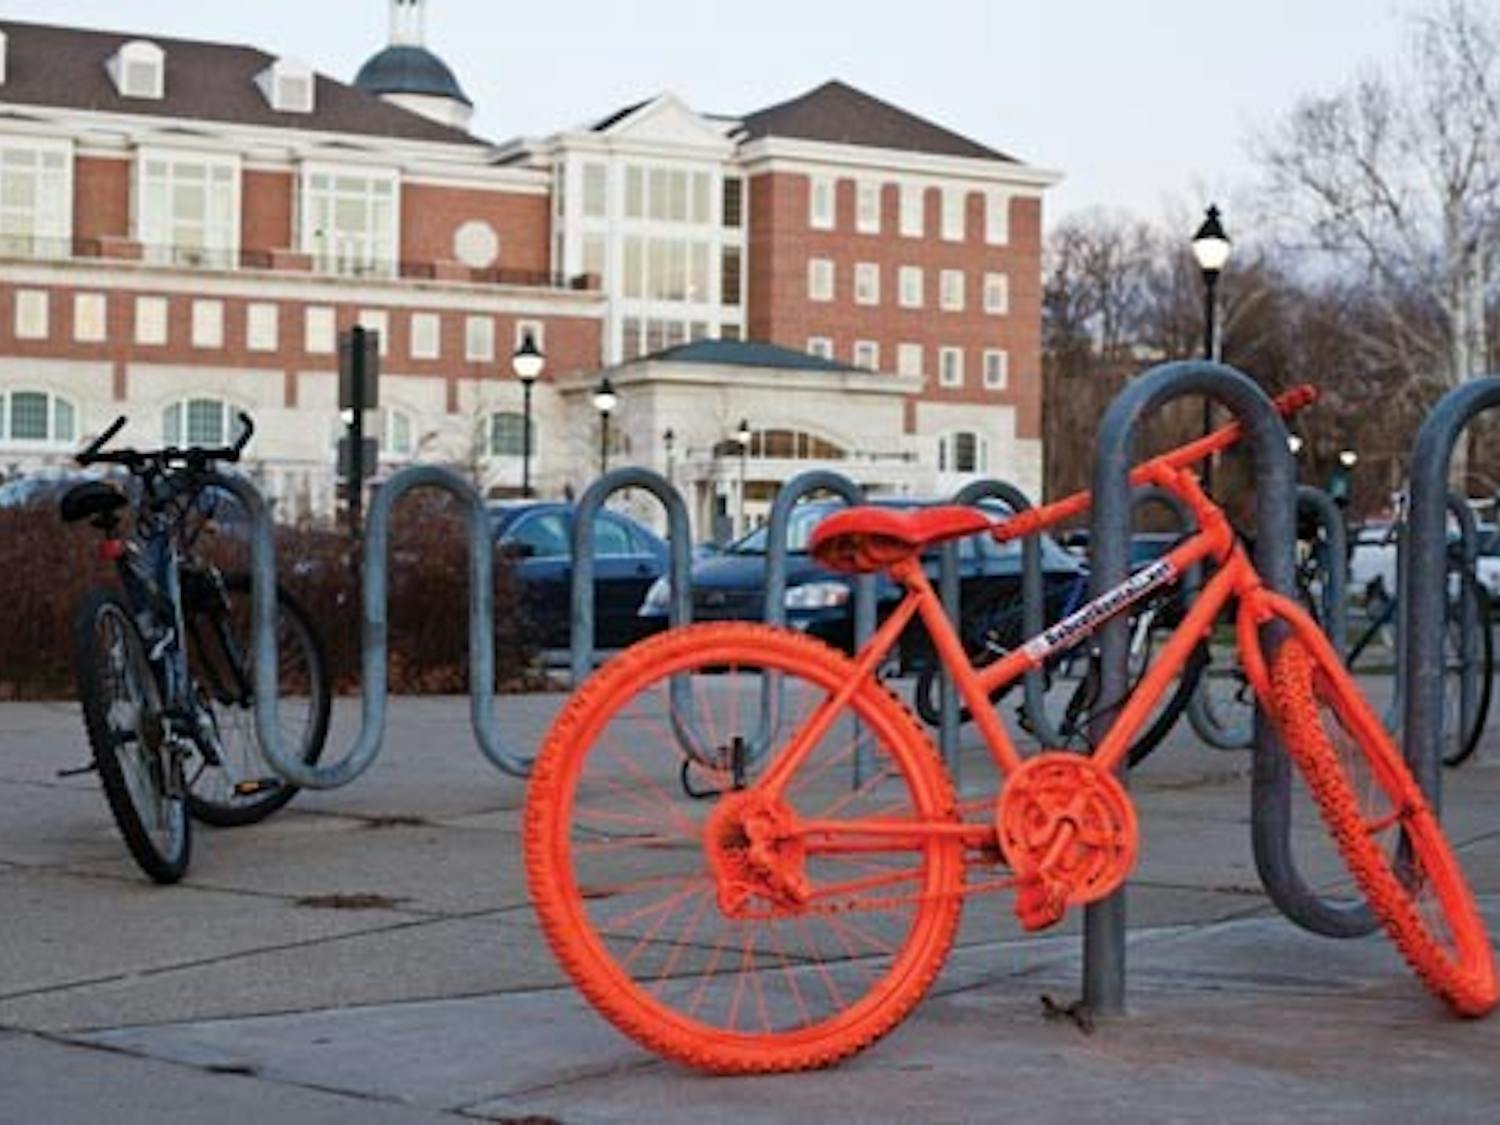 Bright orange bikes peddle local rental agency  